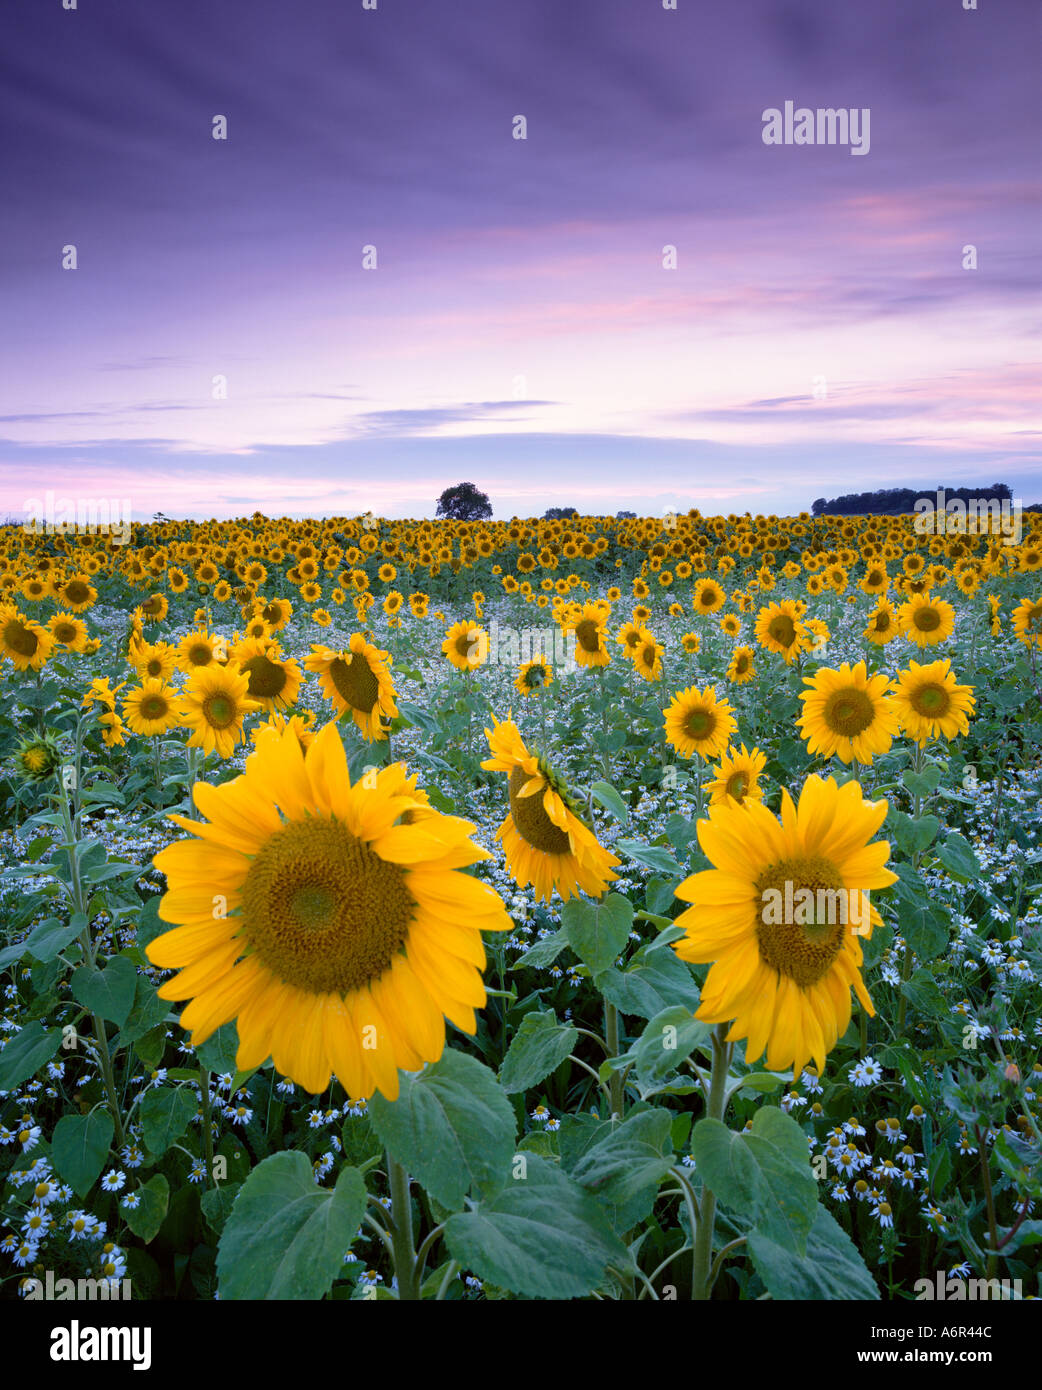 Sunflowers at sunset Stock Photo